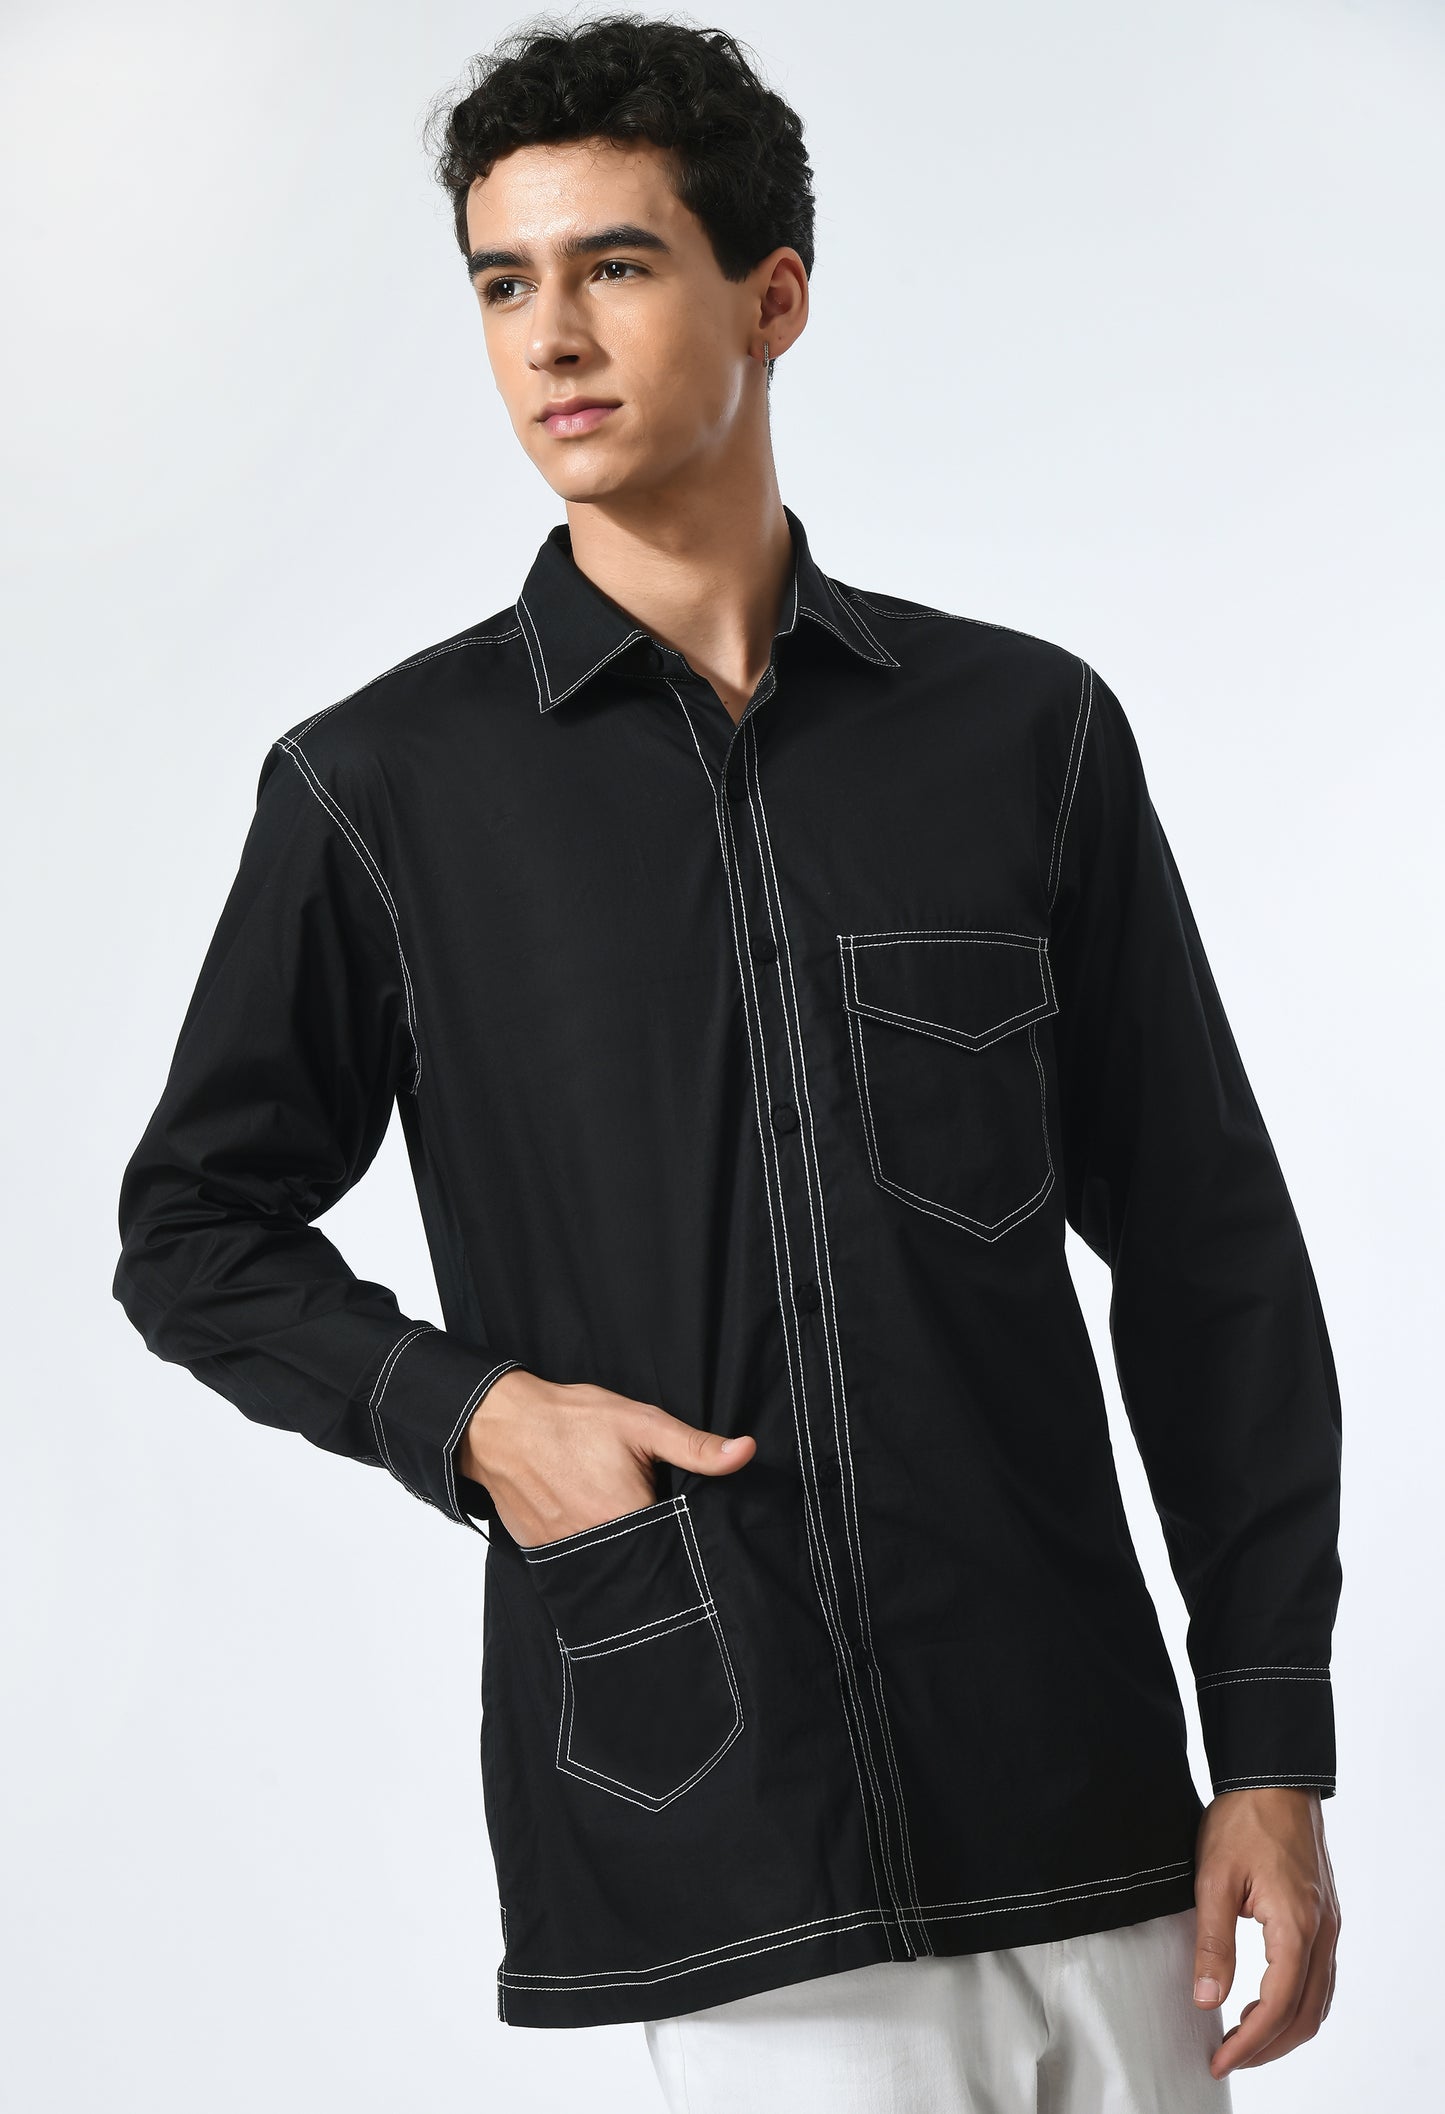 Men's black cotton shirt features a classic collar.